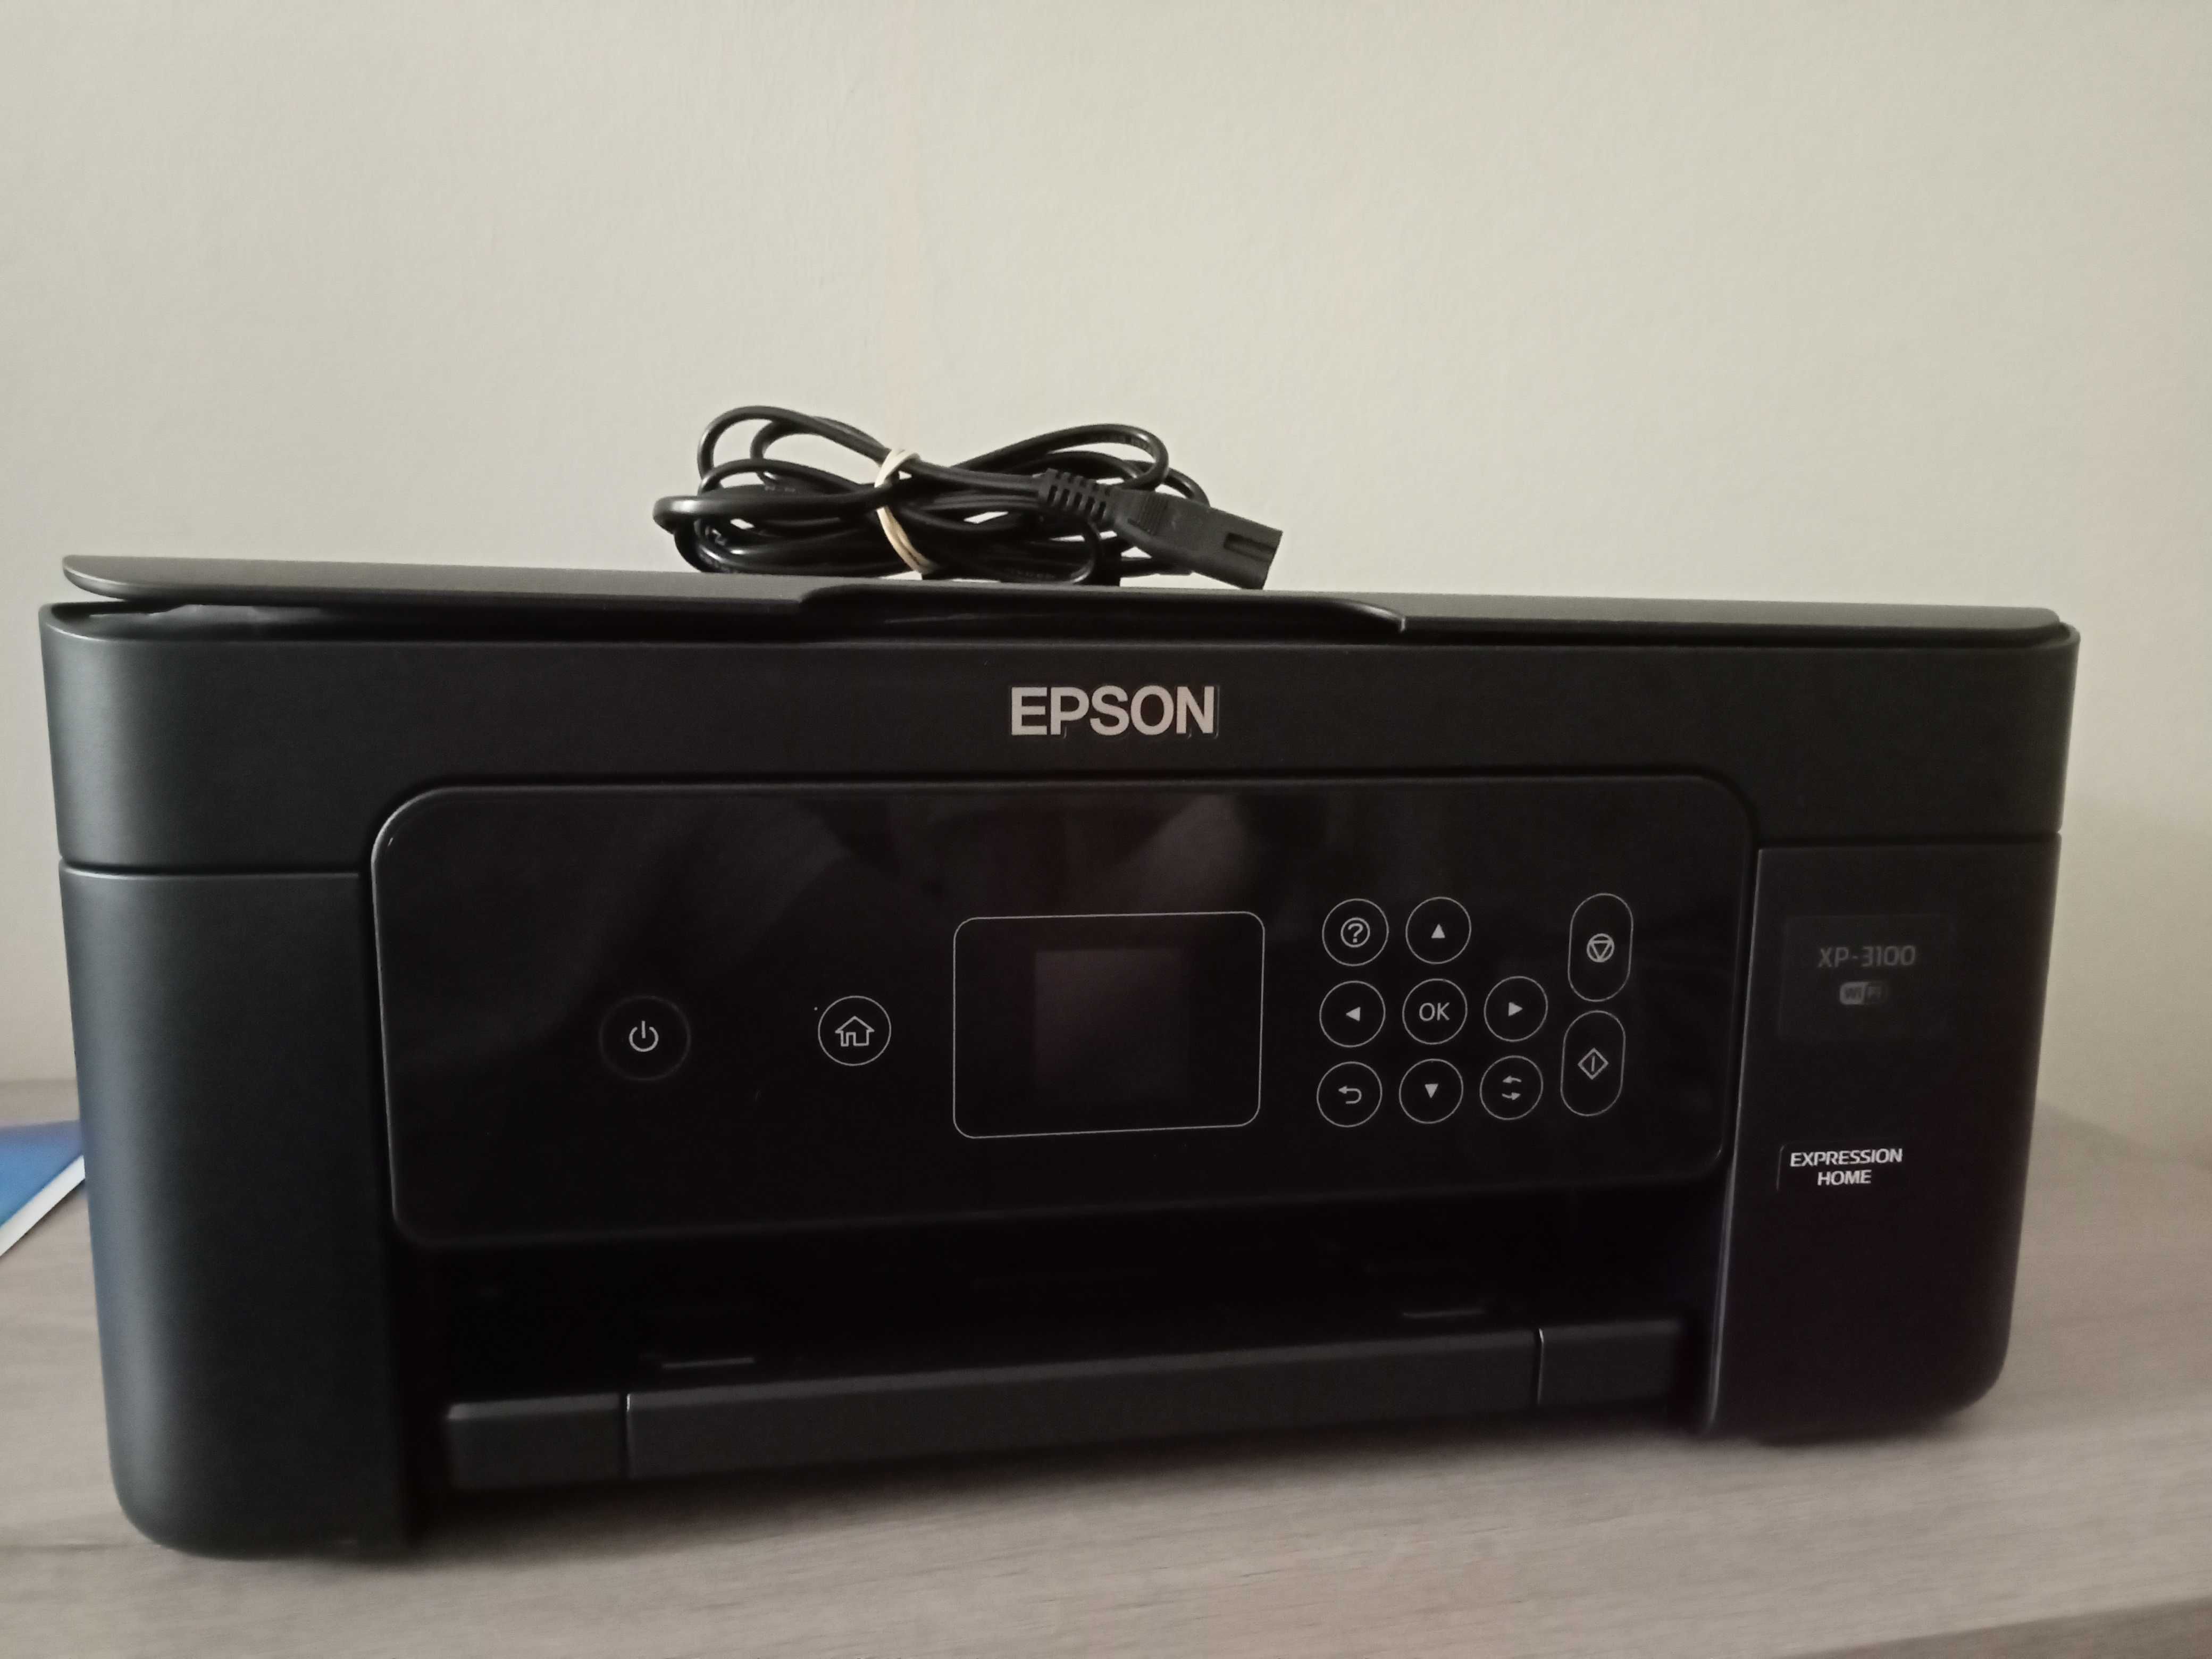 Impressora Epson XP-3100